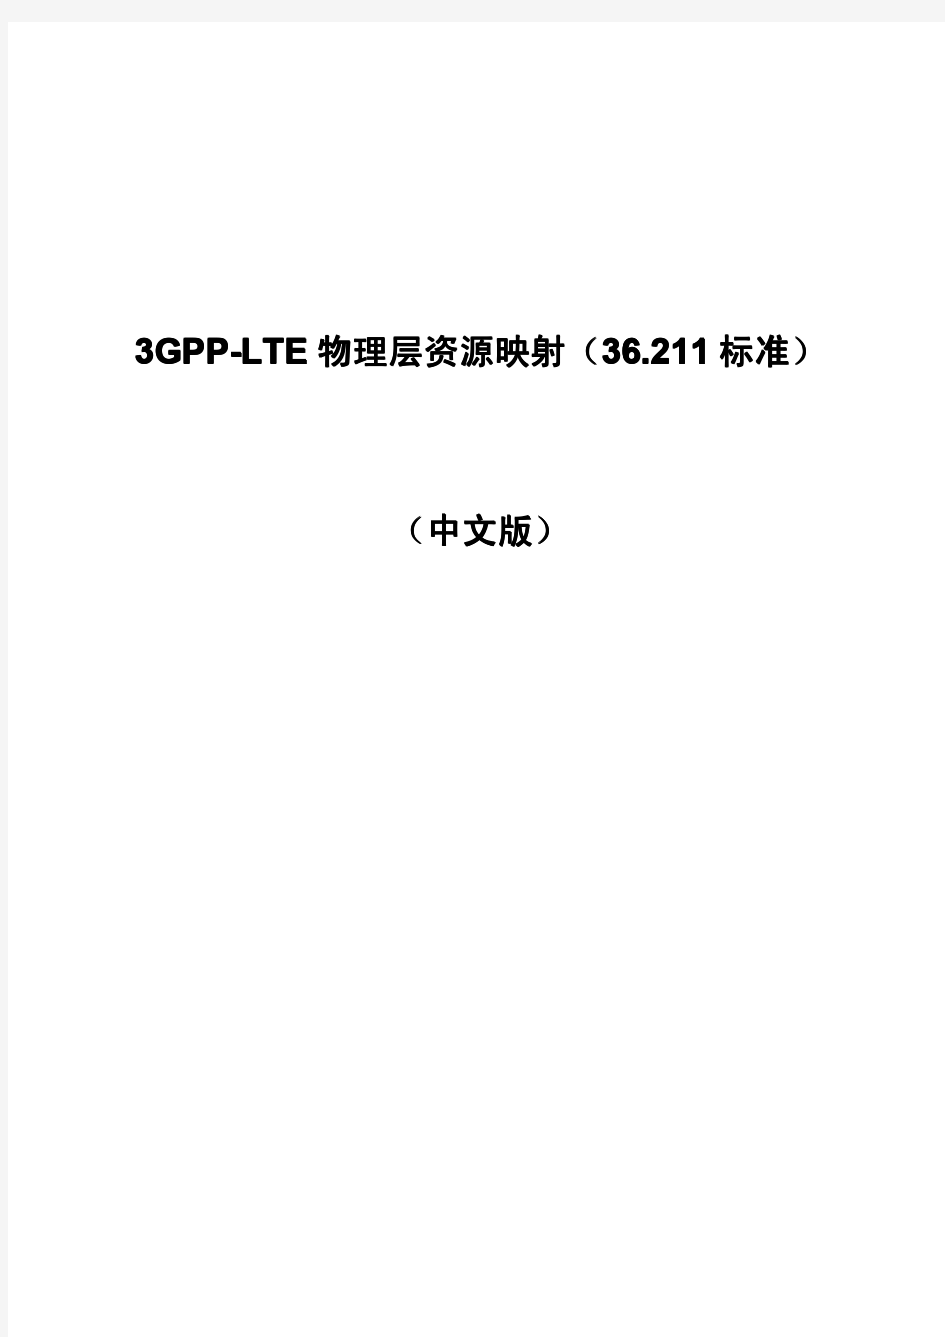 3GPP-LTE物理层资源映射(36.211标准)